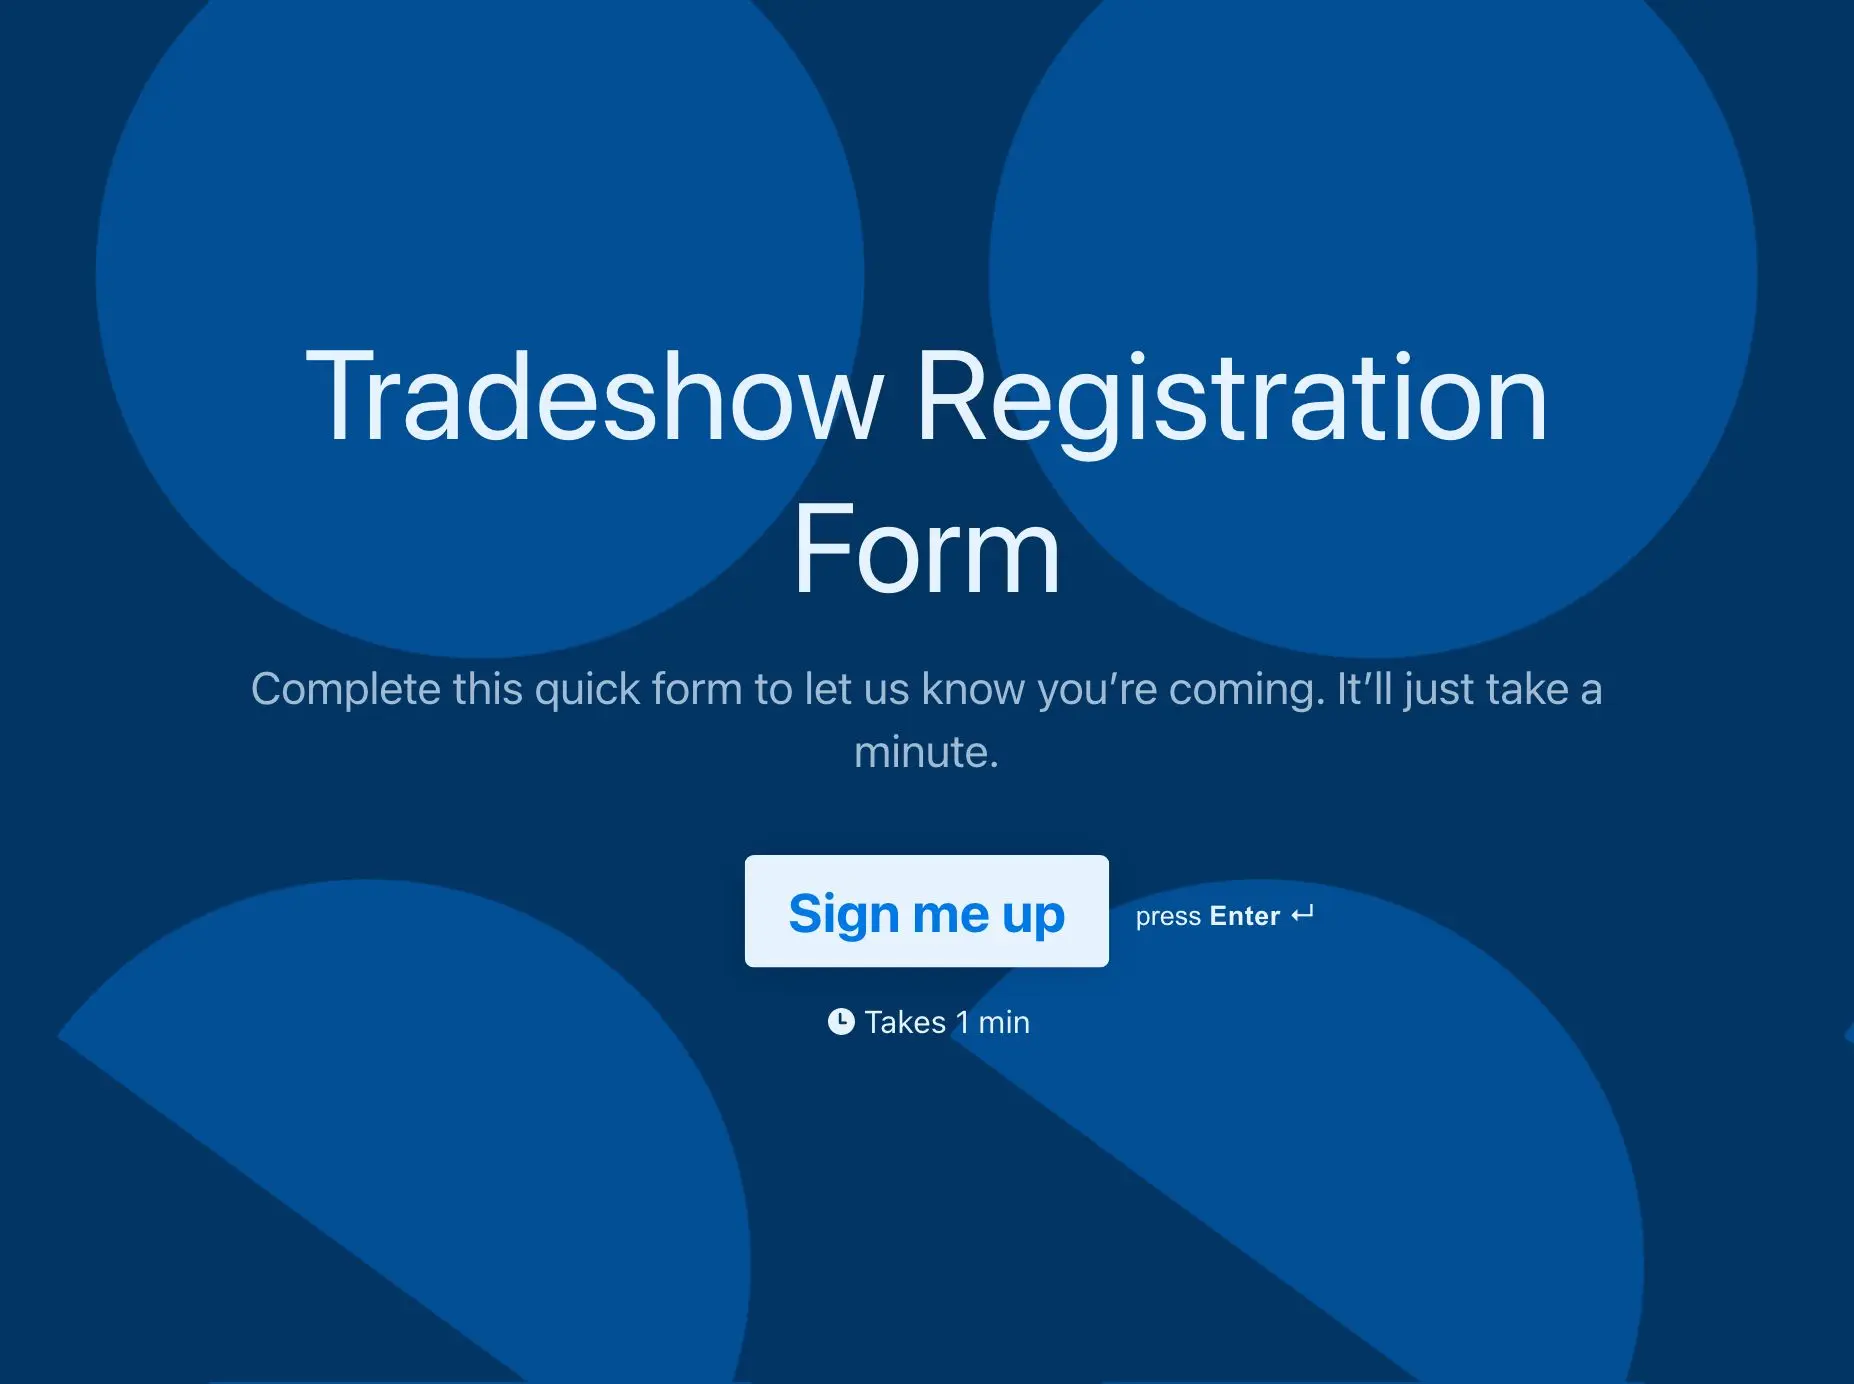 Tradeshow Registration Form Template Hero